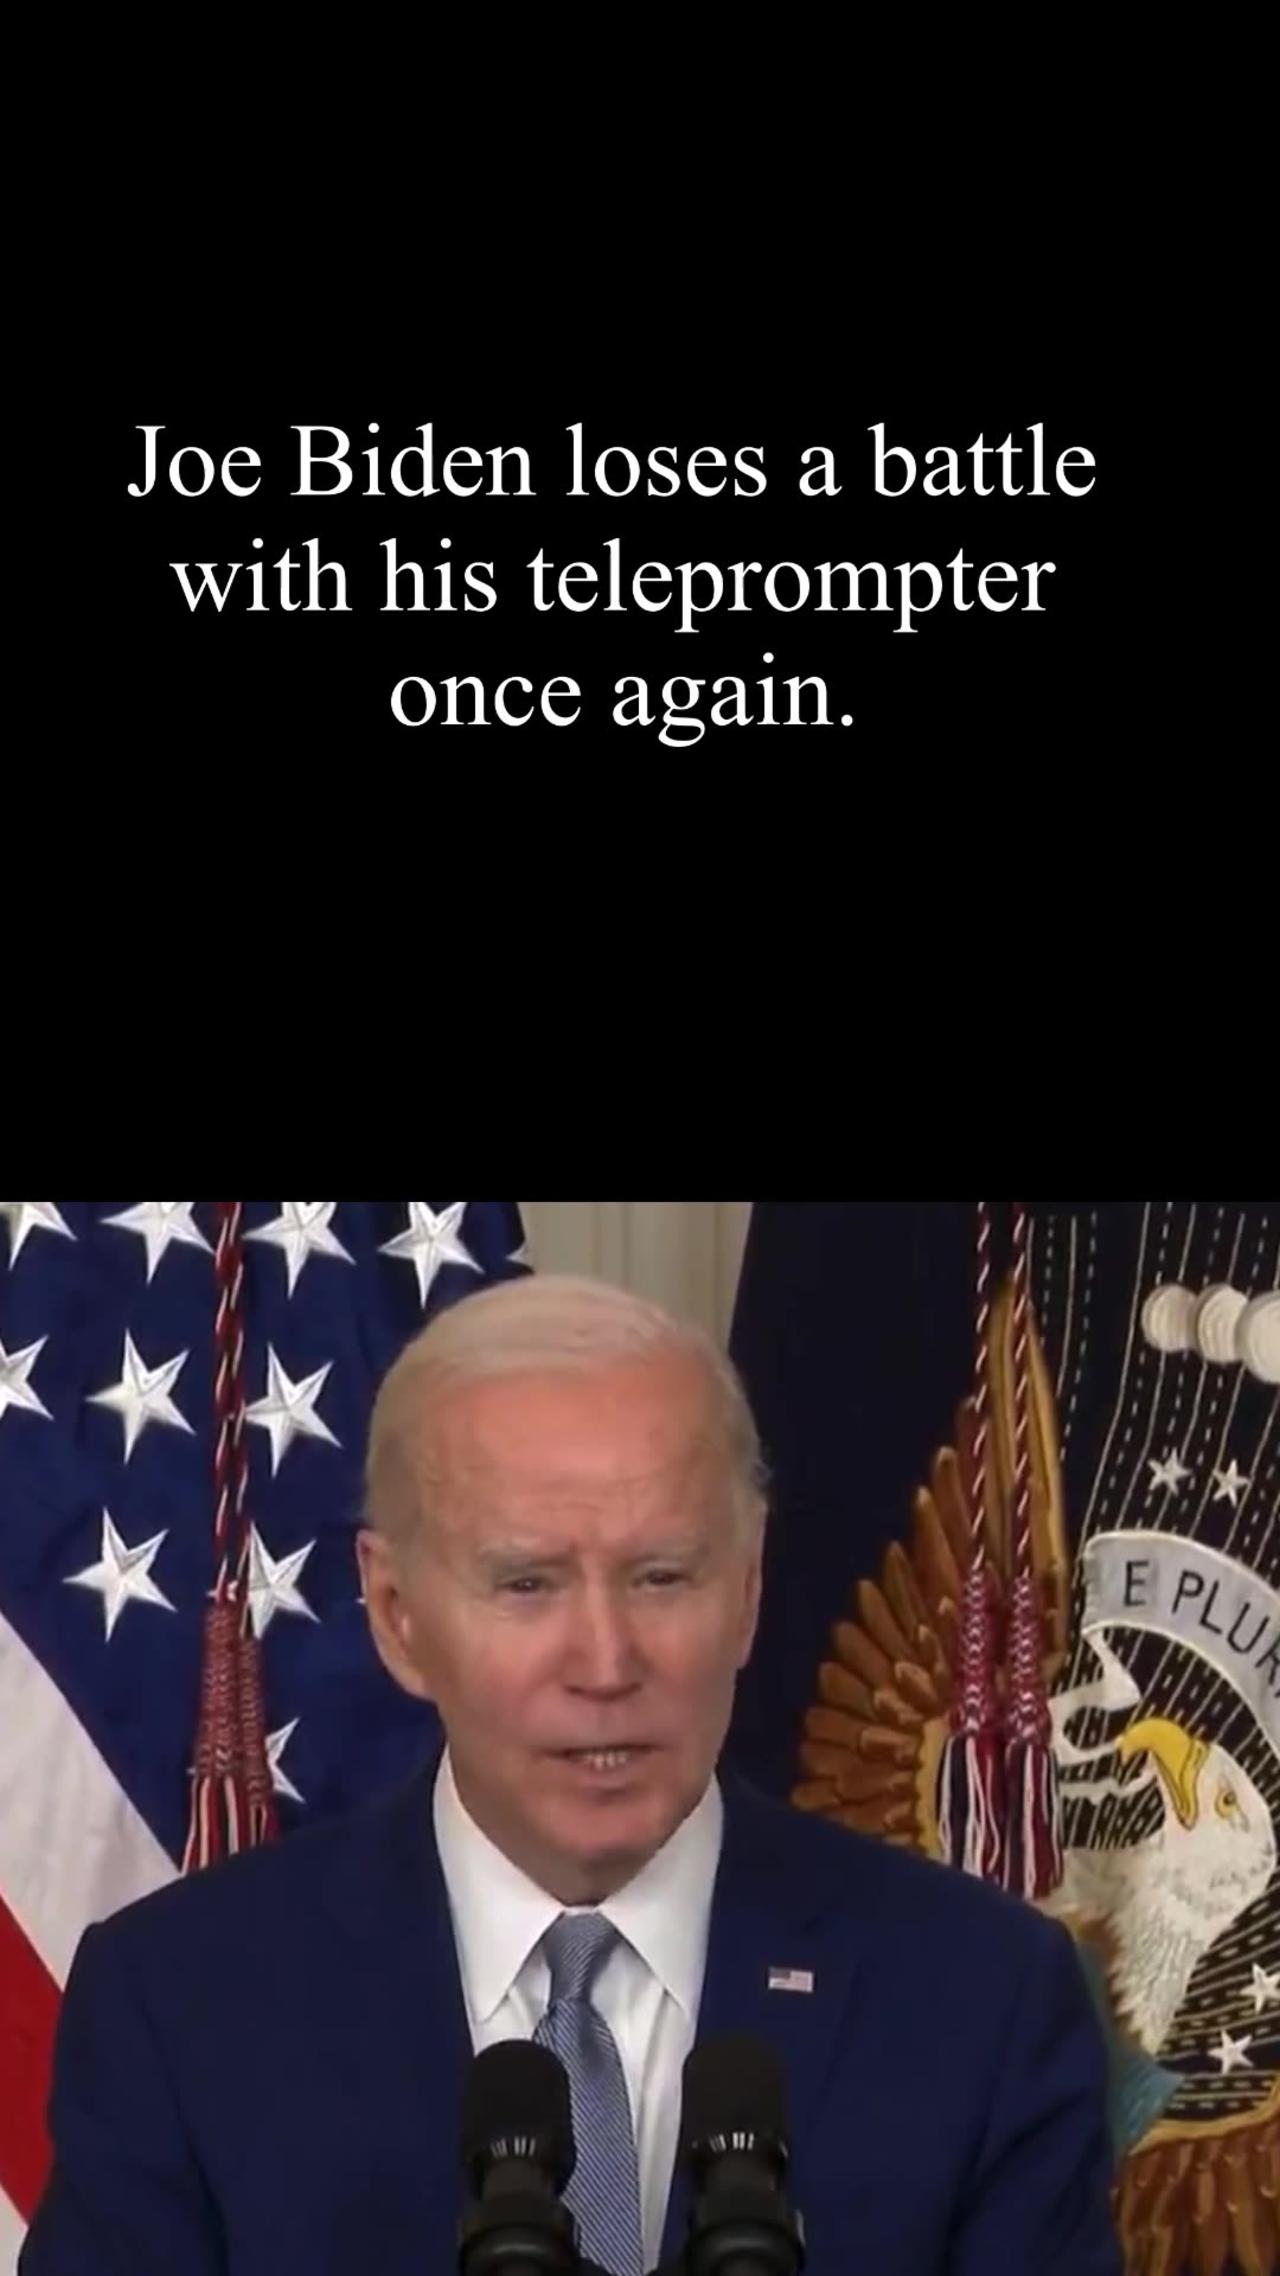 Joe Biden loses Teleprompter Battle ones again